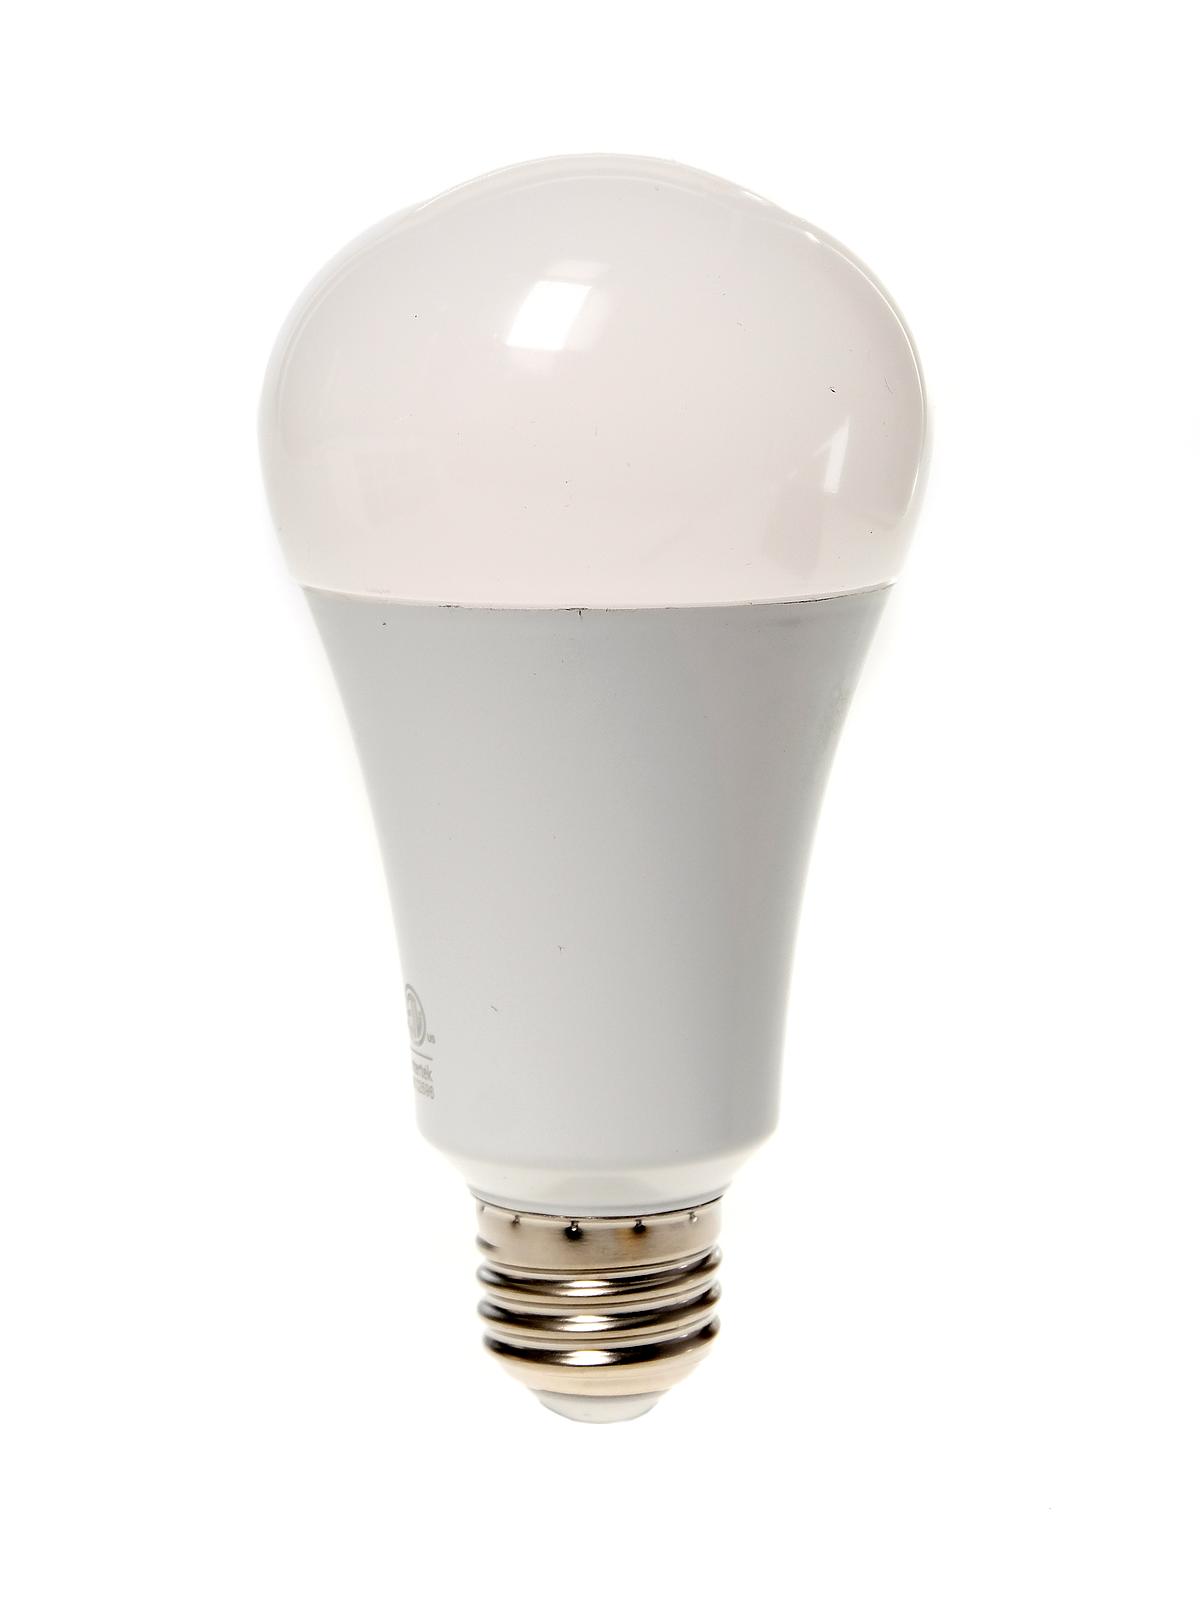 15W LED Light Bulb Each